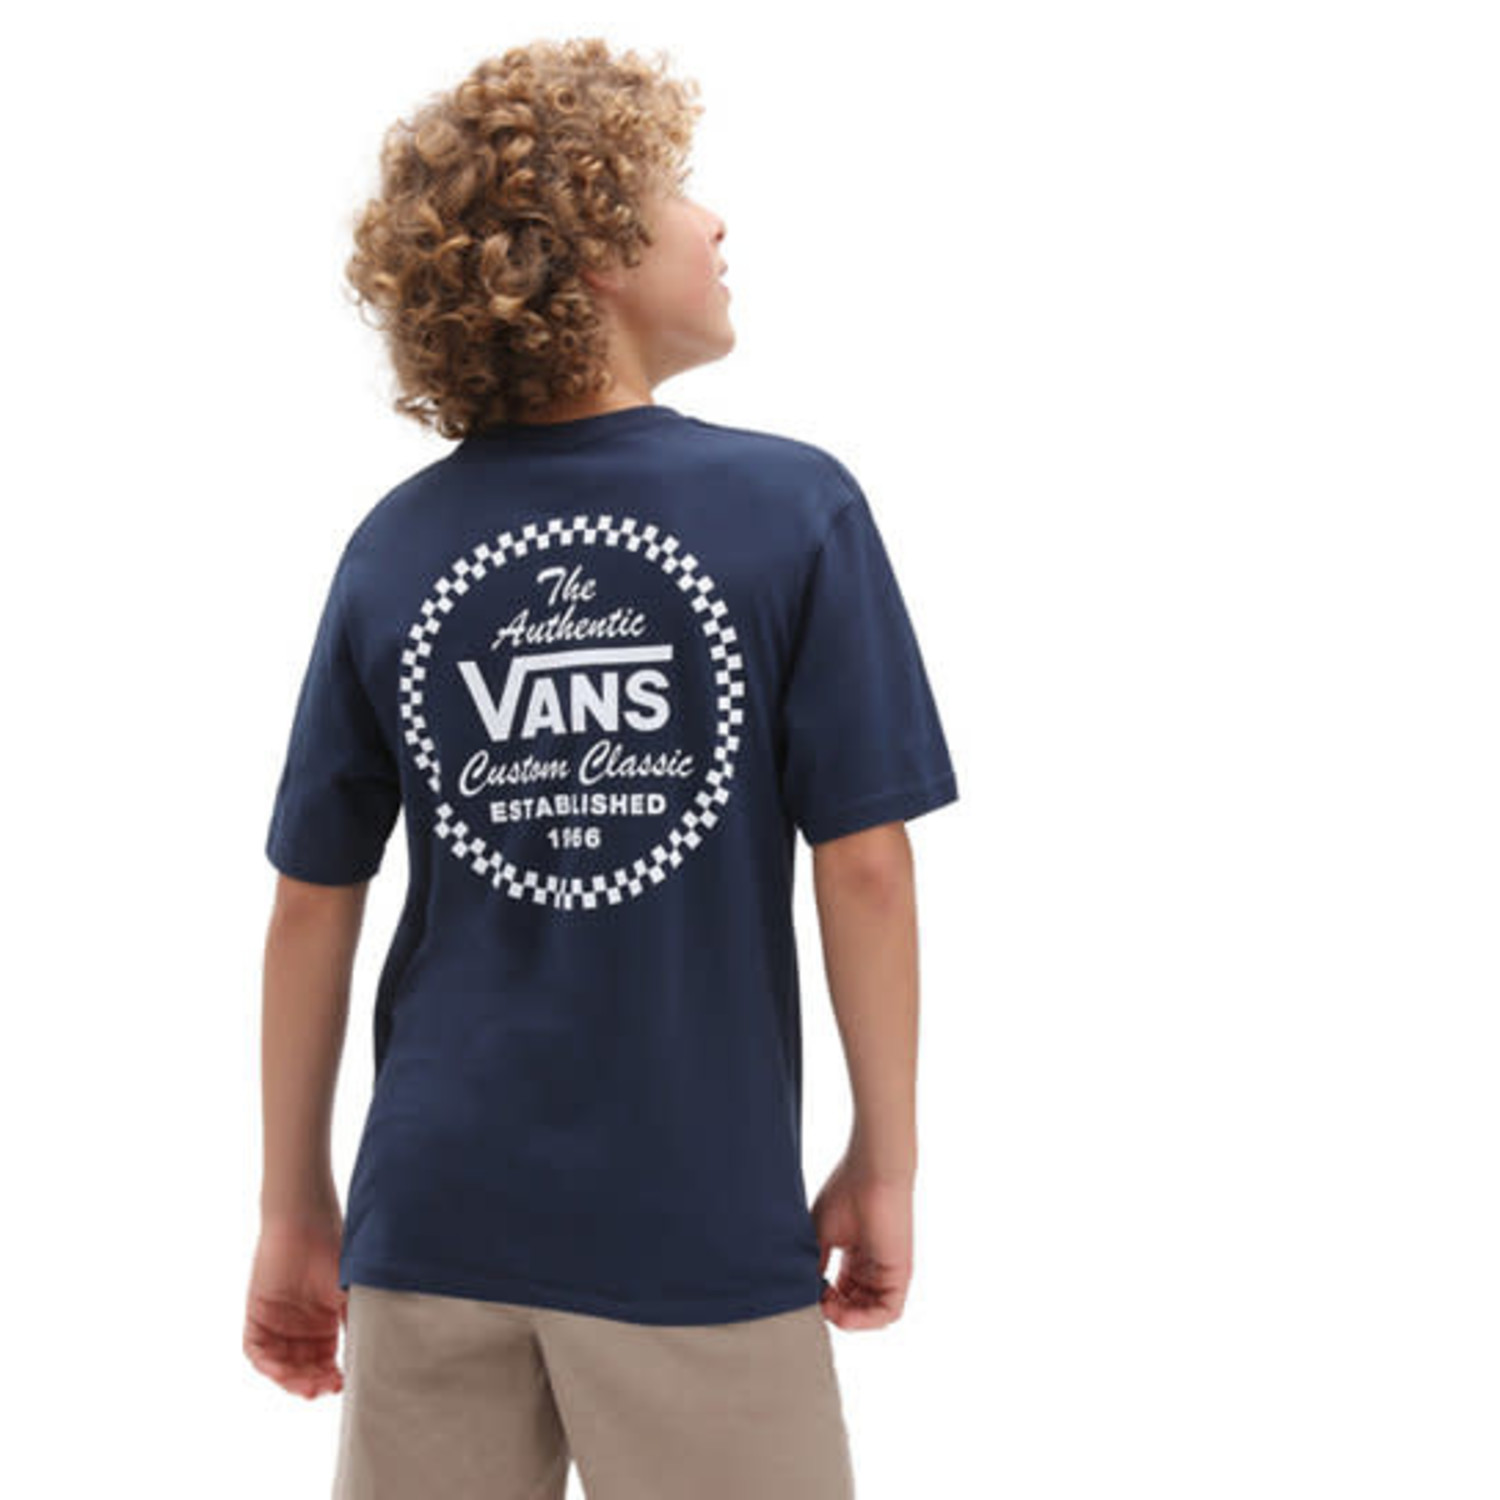 VANS Vans Custom Classic T-Shirt Boys 